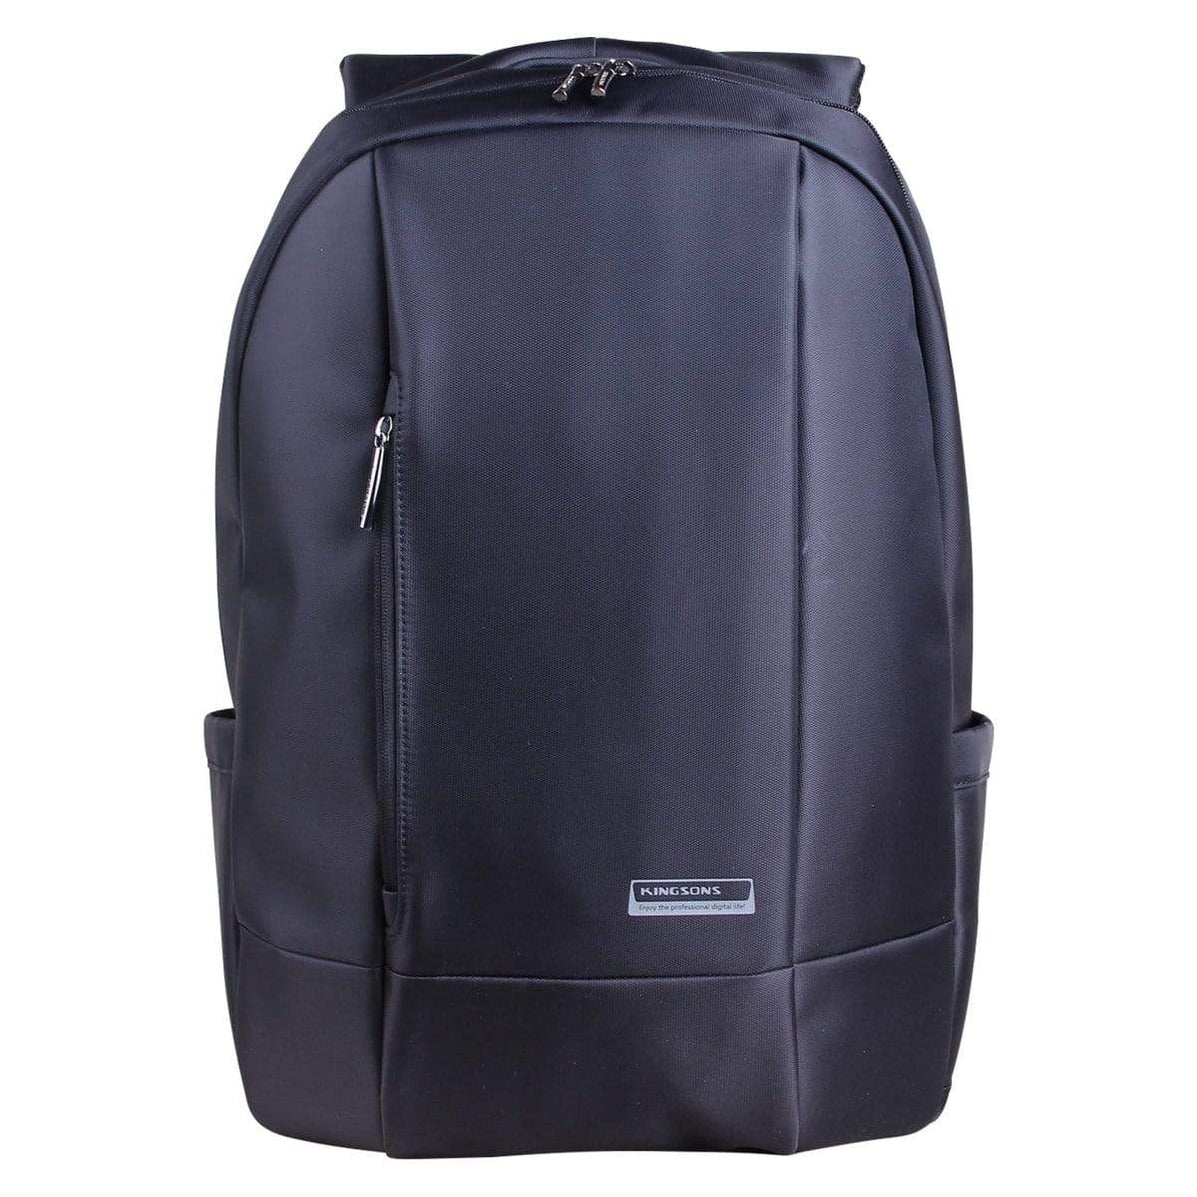 kingsons business travel laptop backpack 17